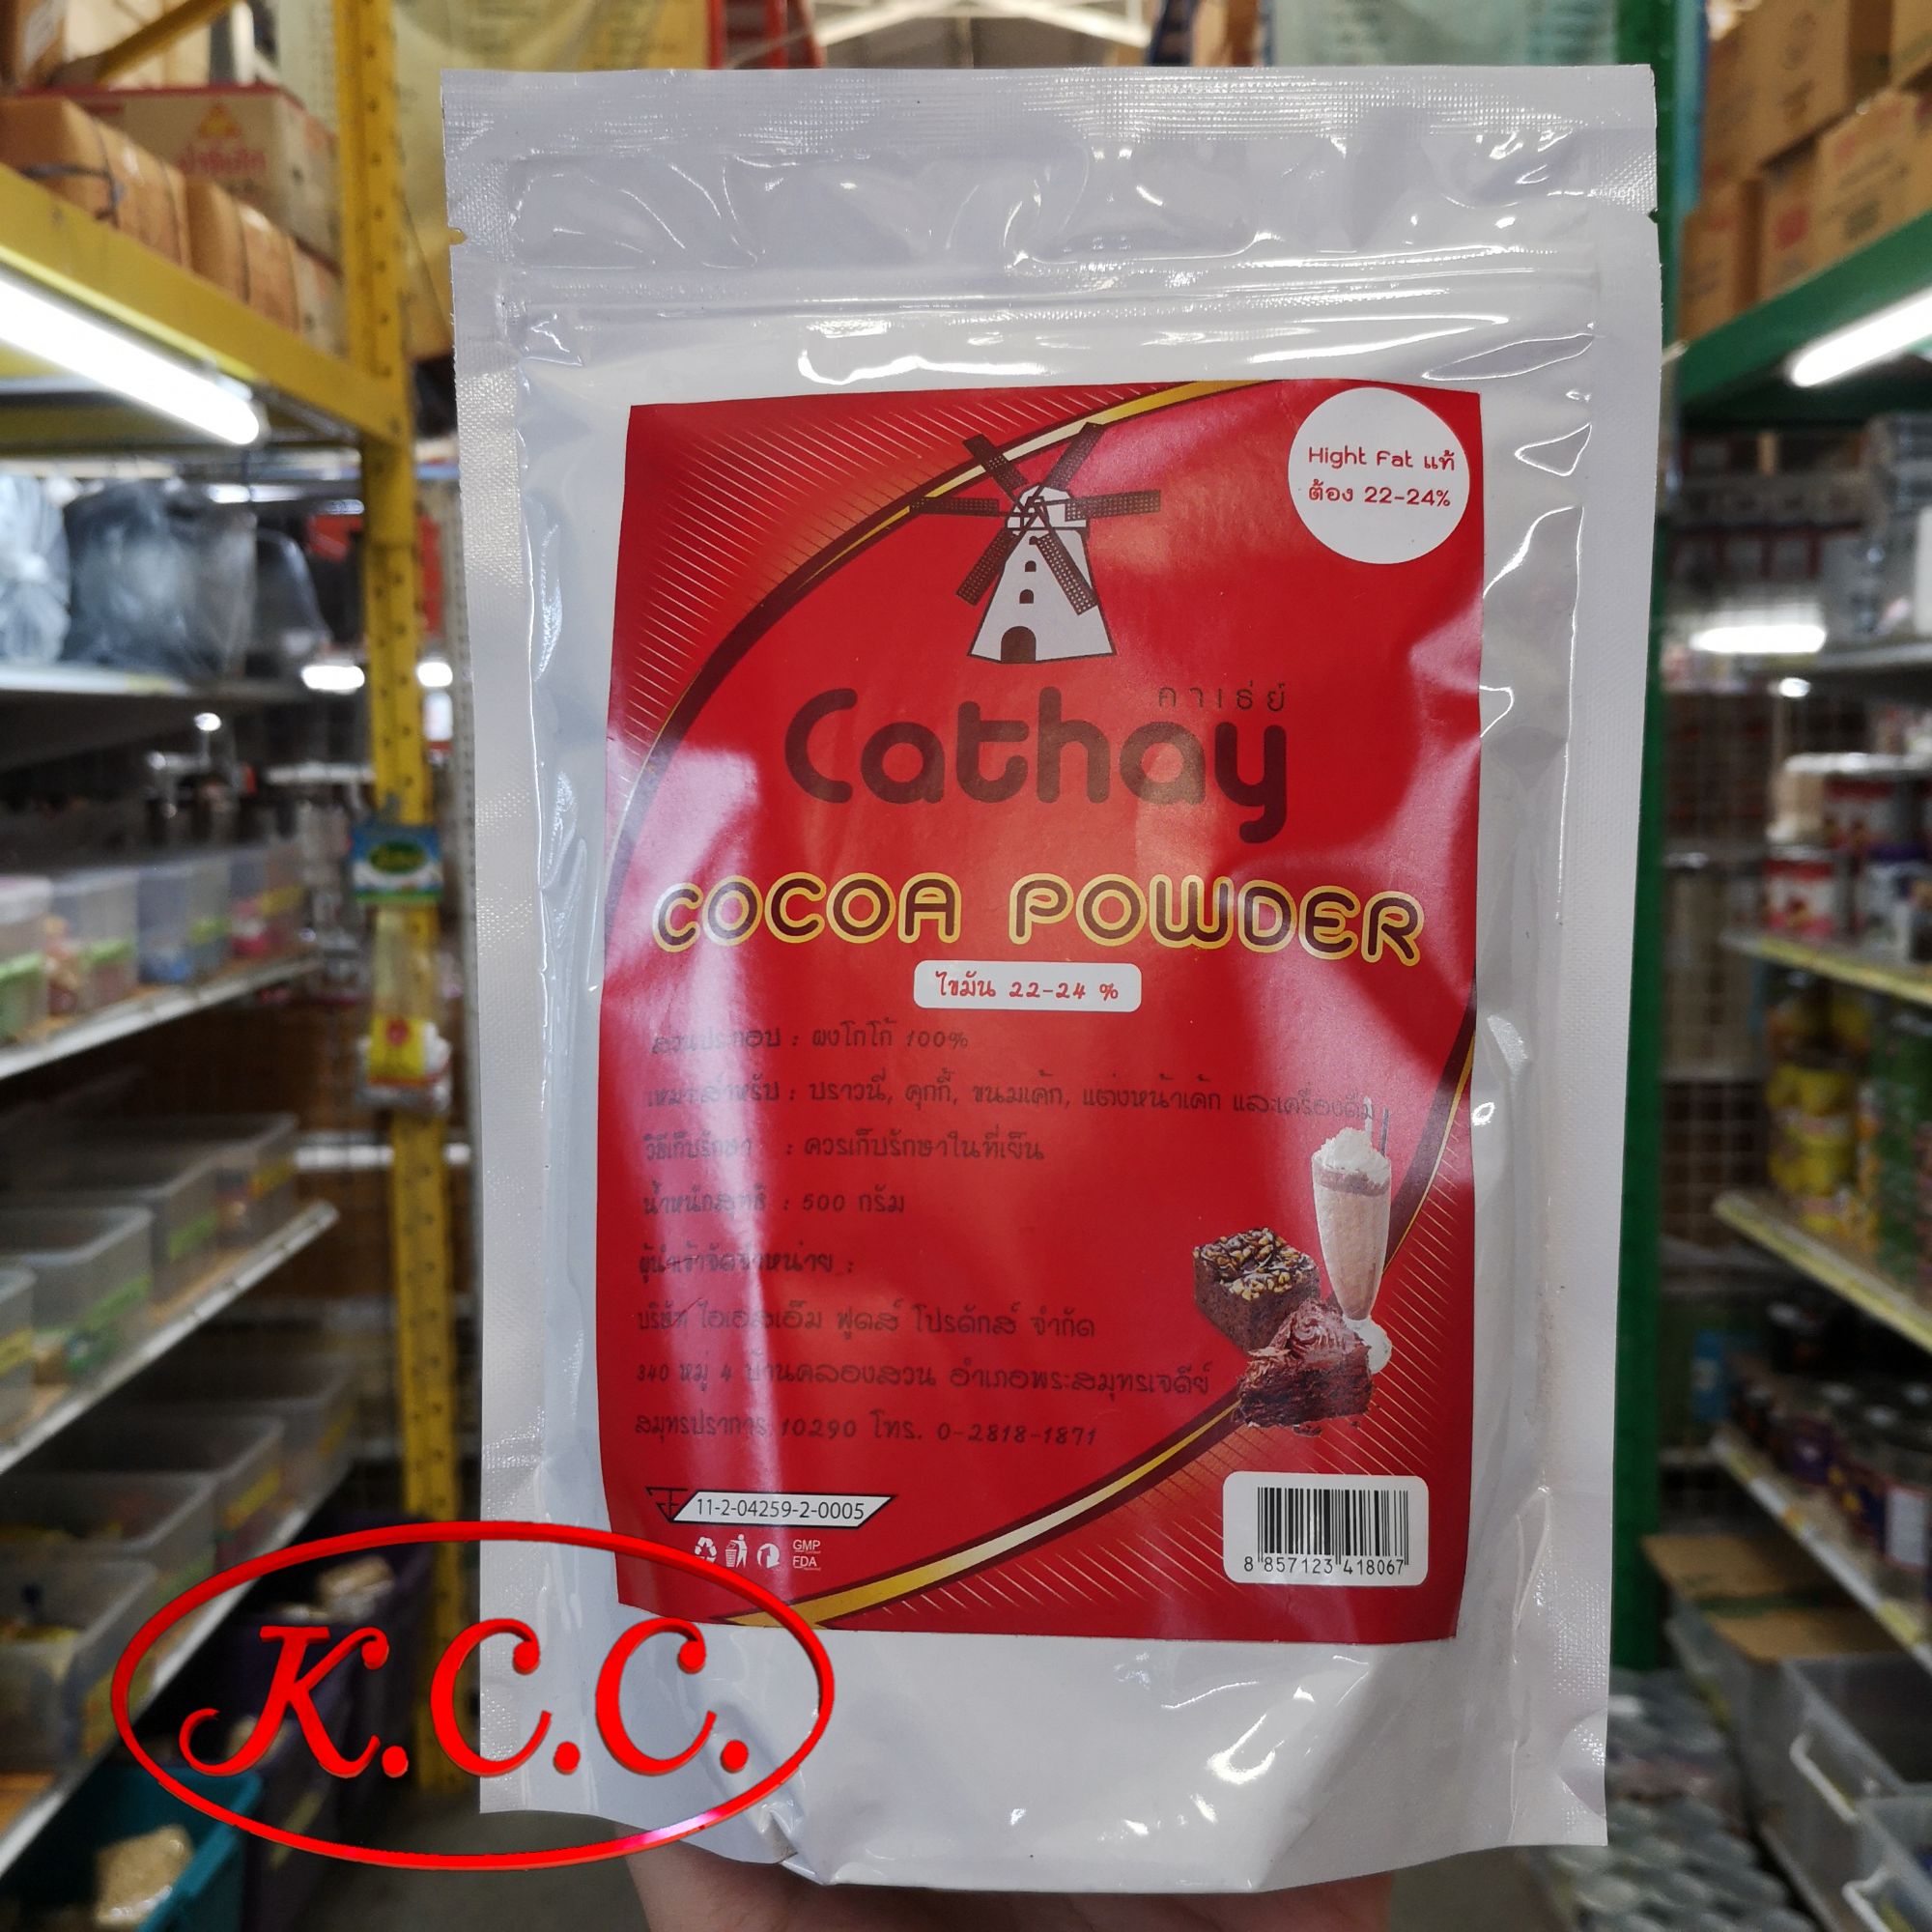 KCC ผงโกโก้ ตรา คาเธ่ย์ โกโก้ ผง แท้ Cathay cocoa powder 500 g. ไขมัน 22-24 % ถ่ายจากสินค้าจริง